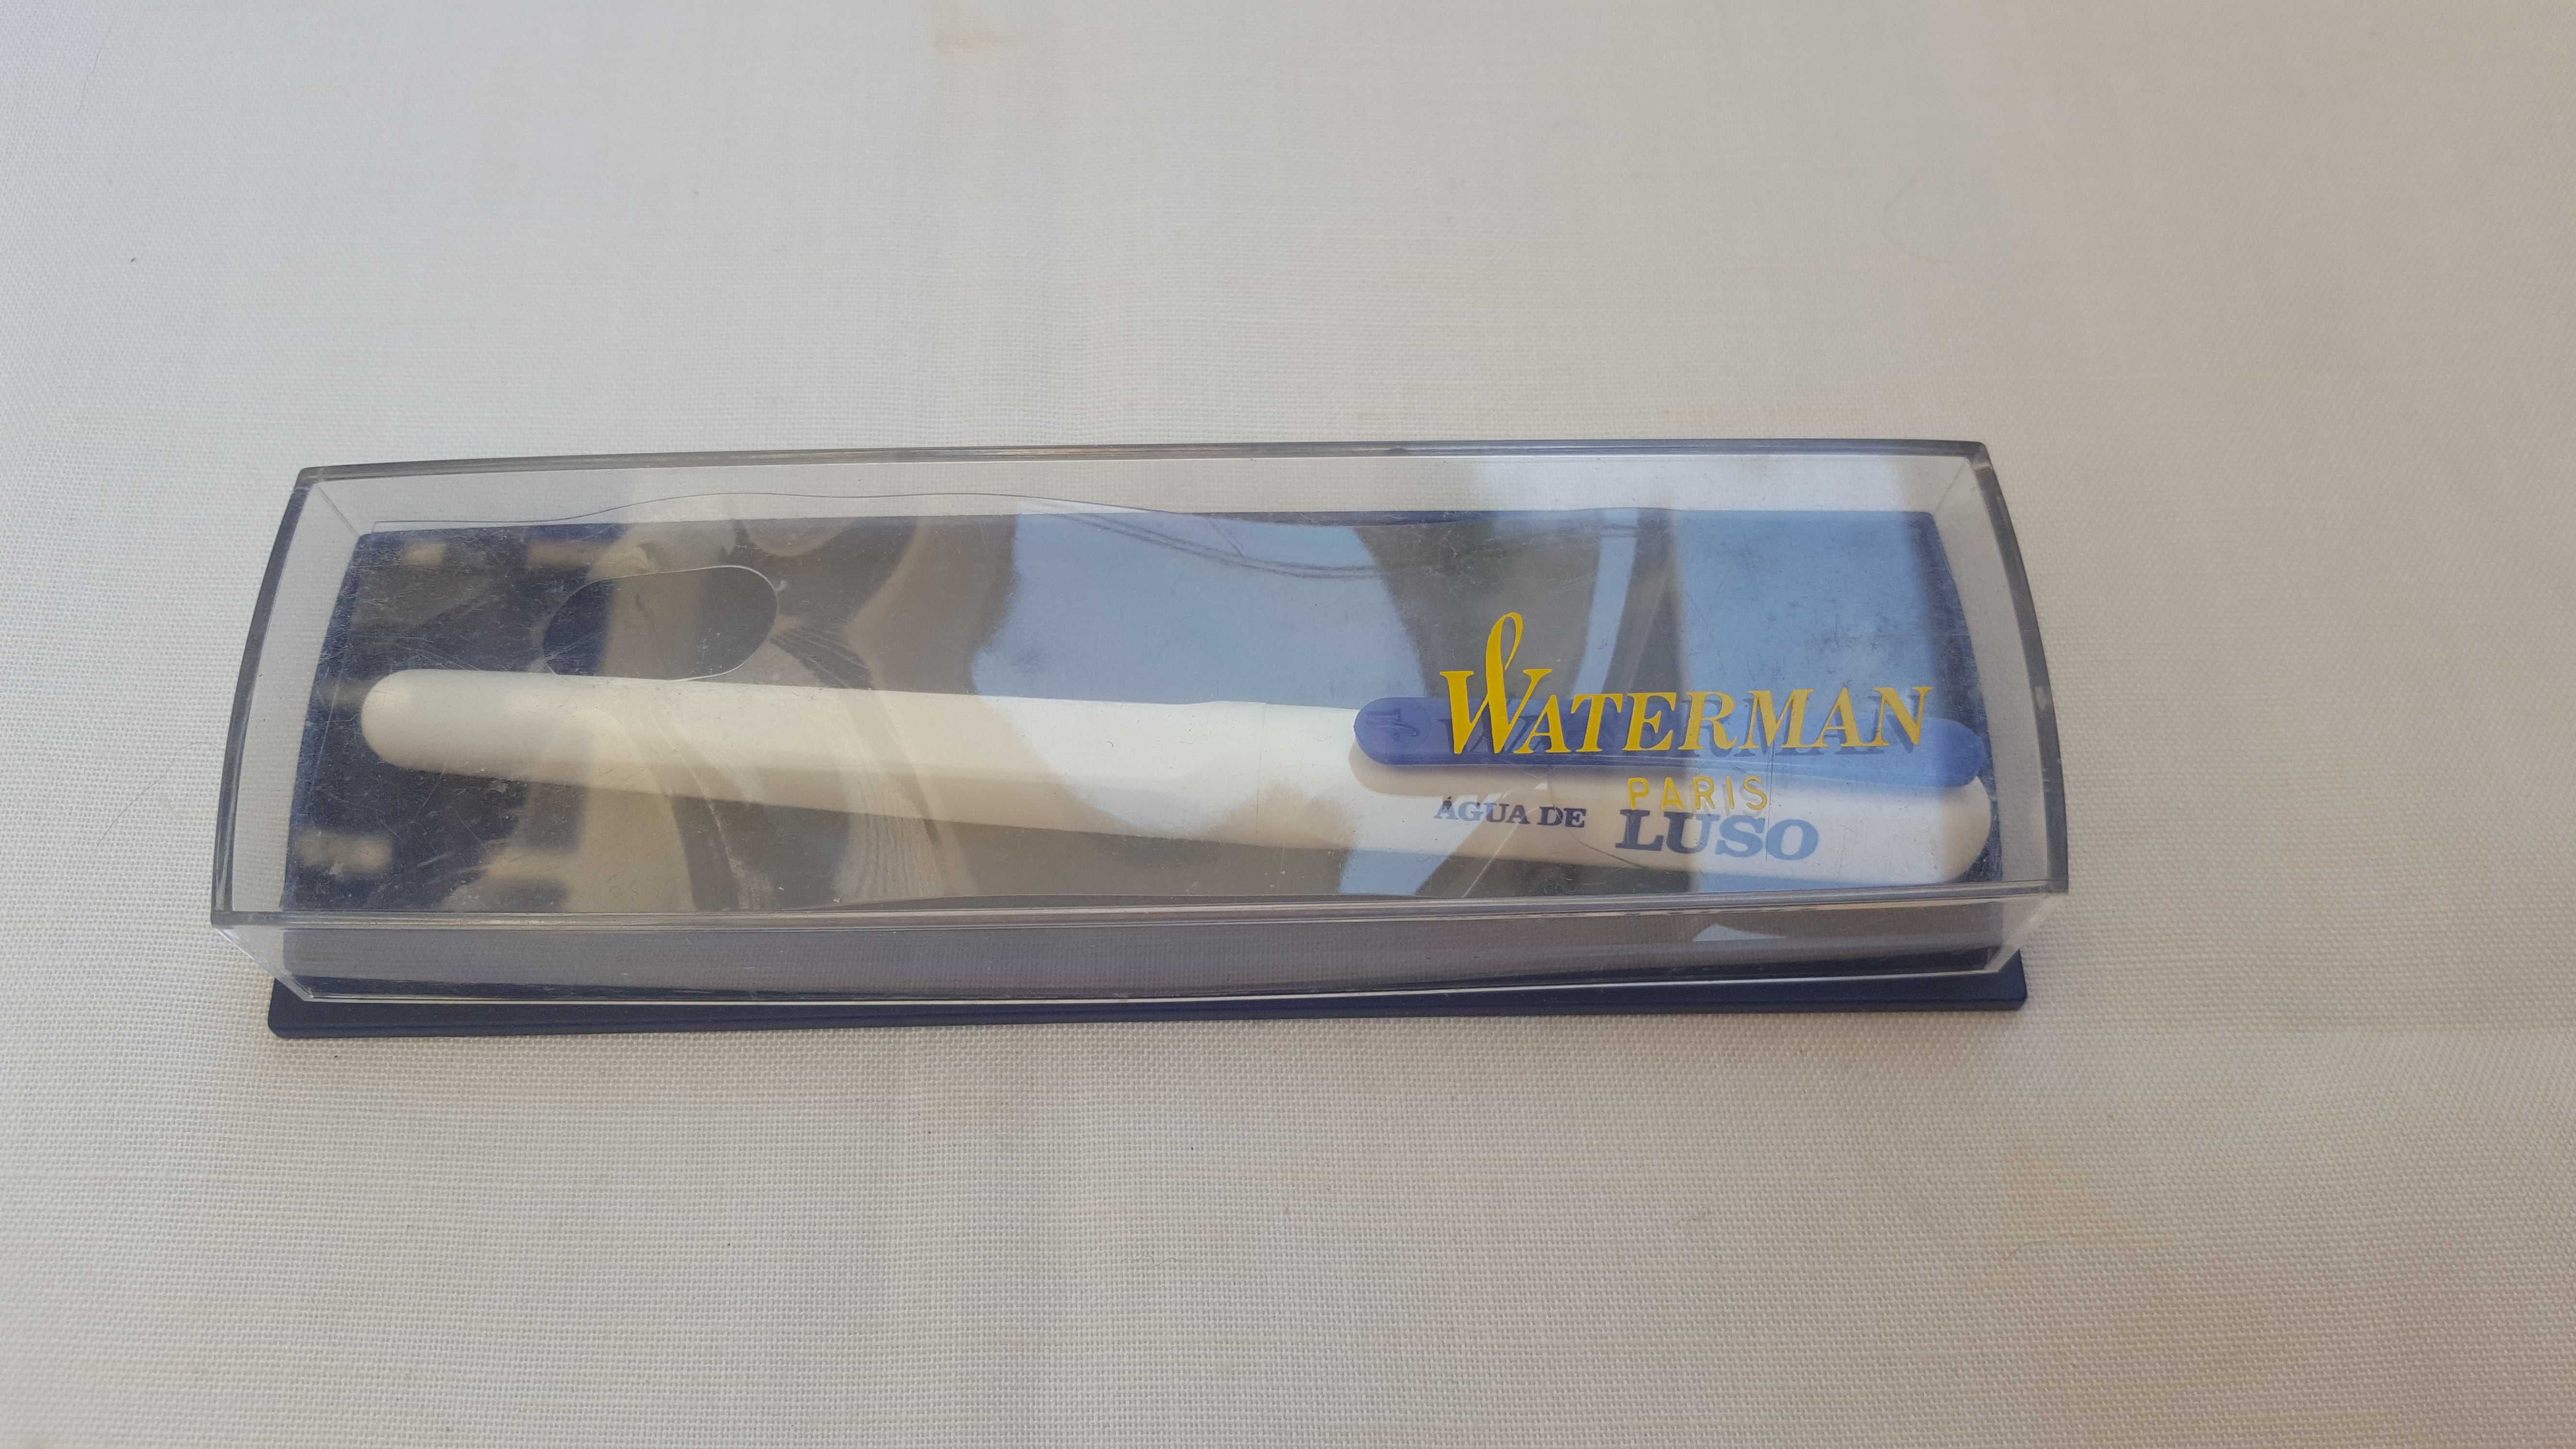 Antiga caneta waterman com publicidade Agua do Luso